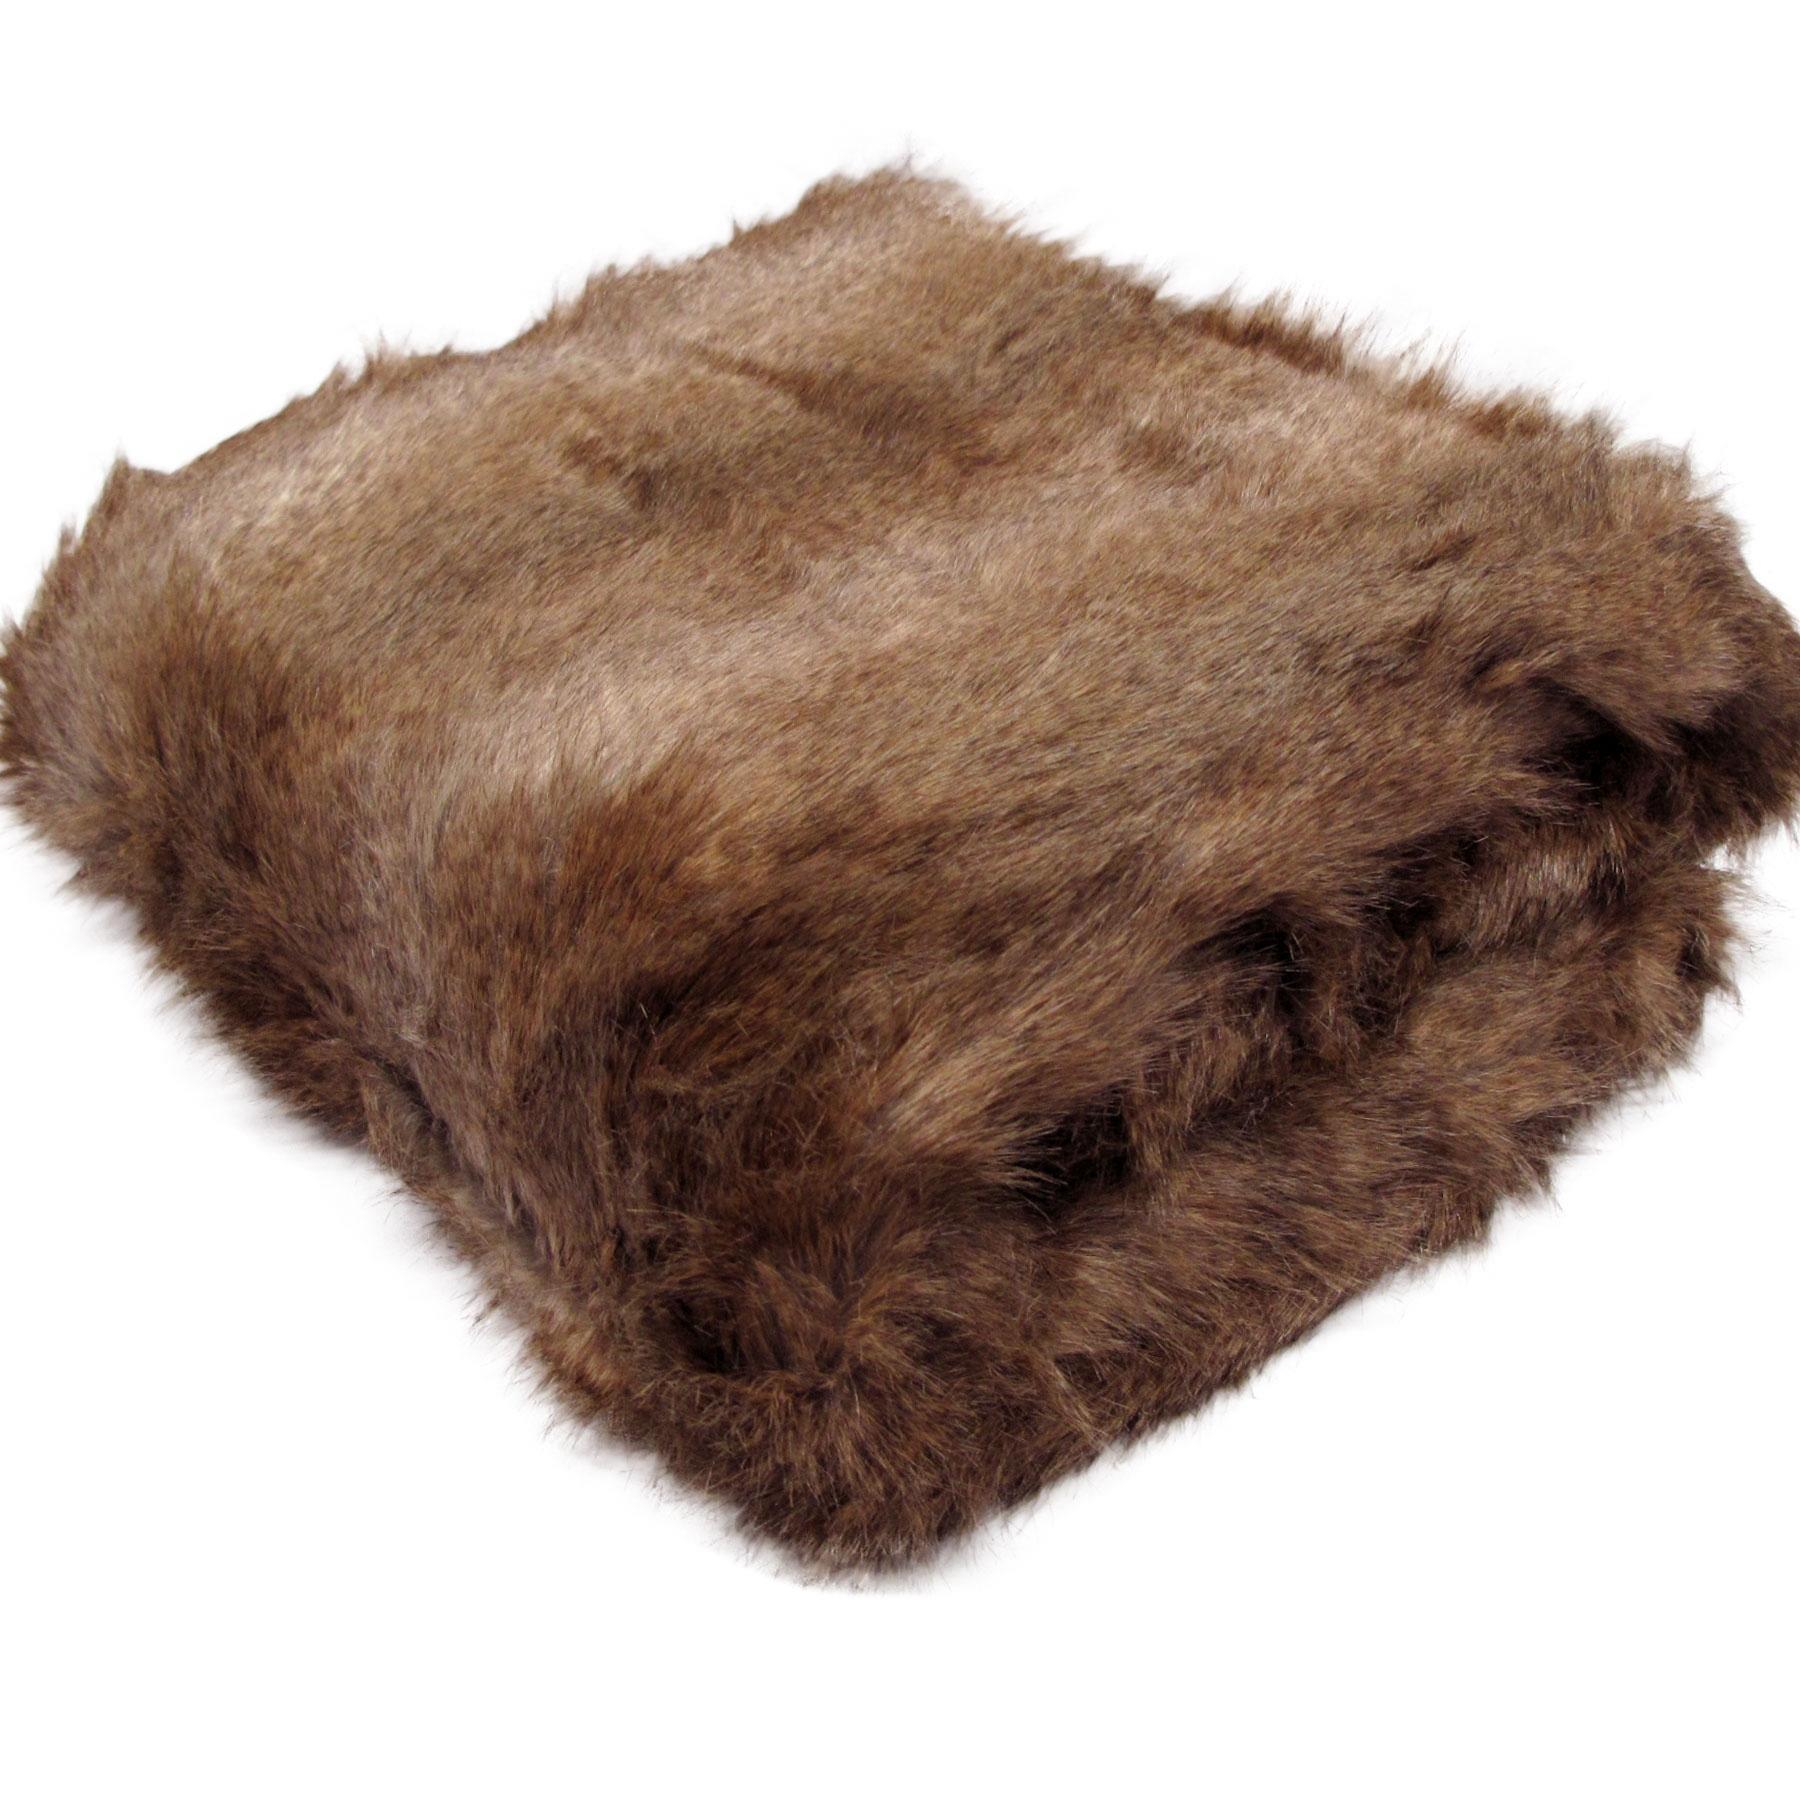 Artex Luxury Long Hair Faux Fur Animal Throw Orangutan